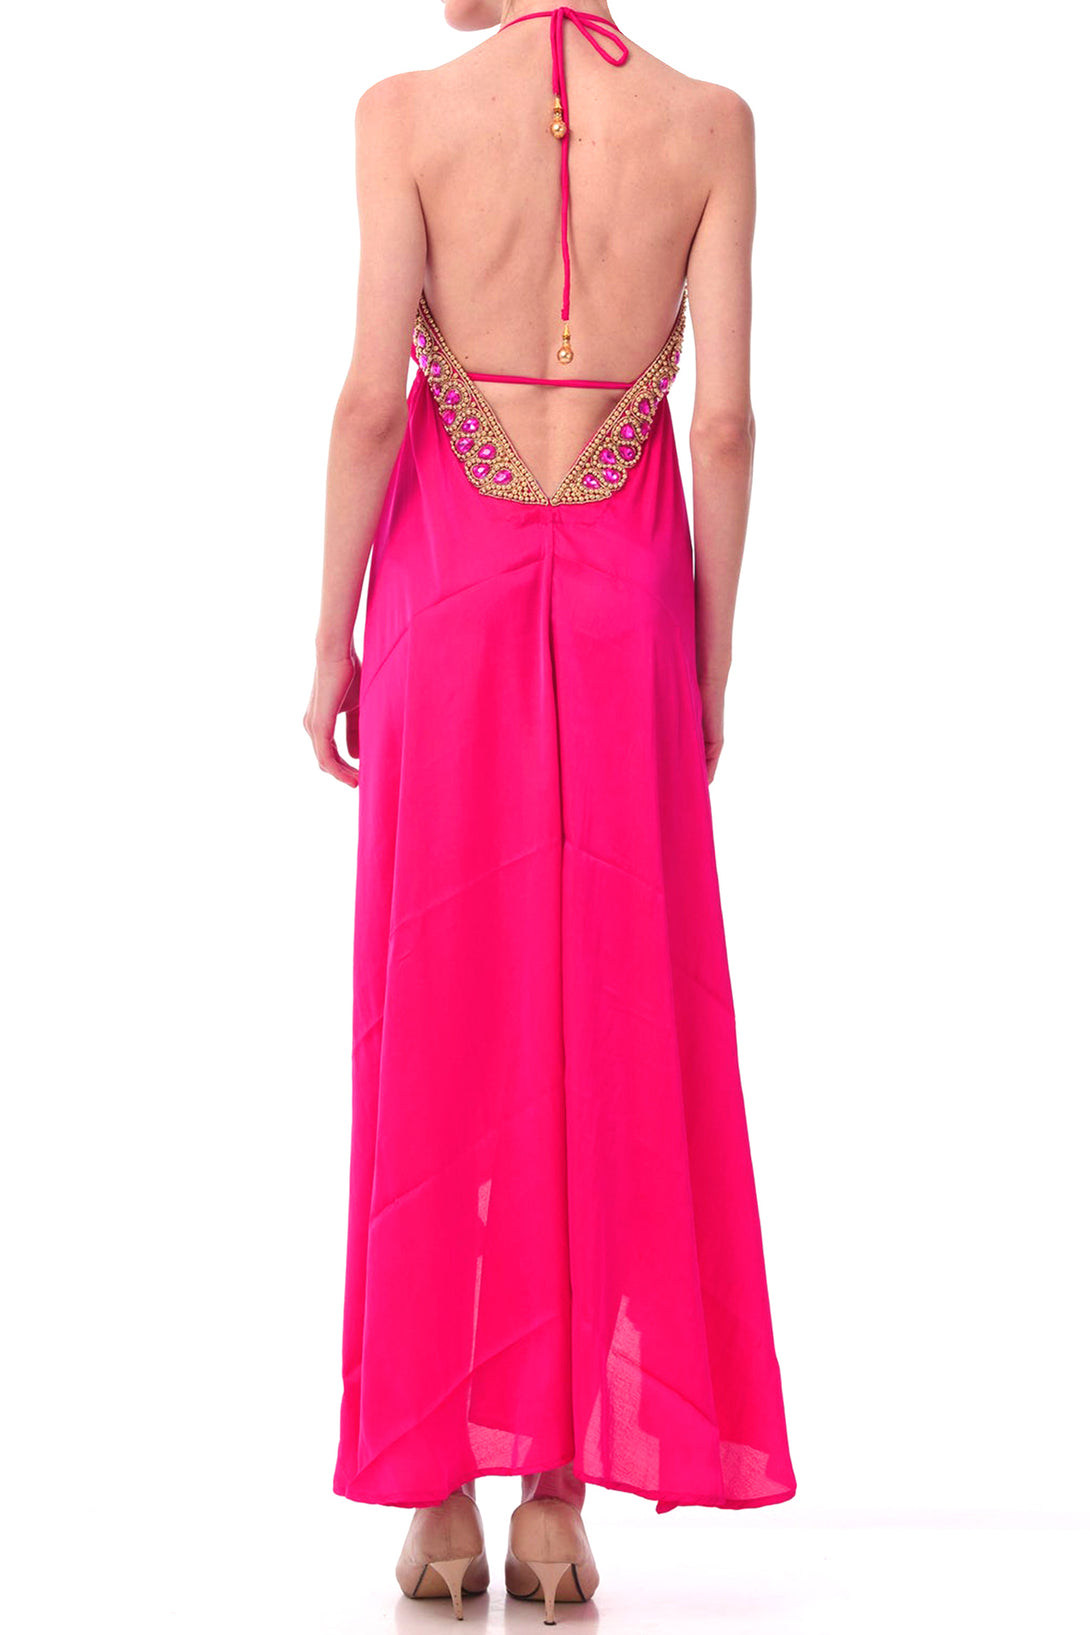  long pink prom dress, summer maxi dresses for women, plunging v neck formal dress,